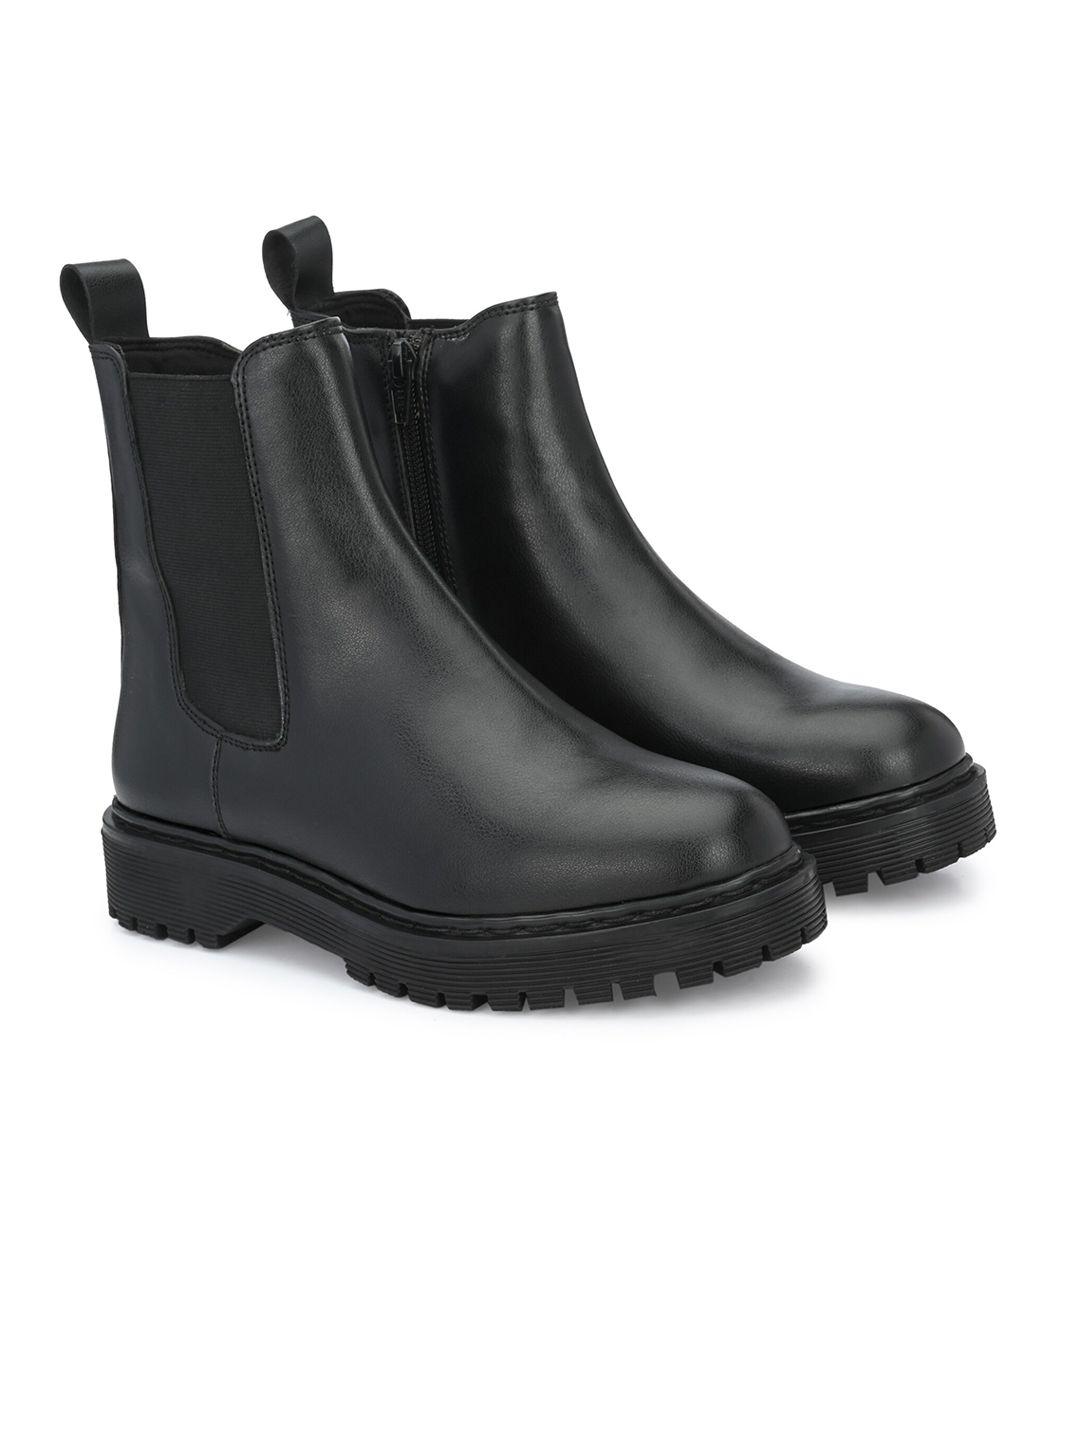 delize-men-vegan-leather-mid-top-casual-chelsea-boots